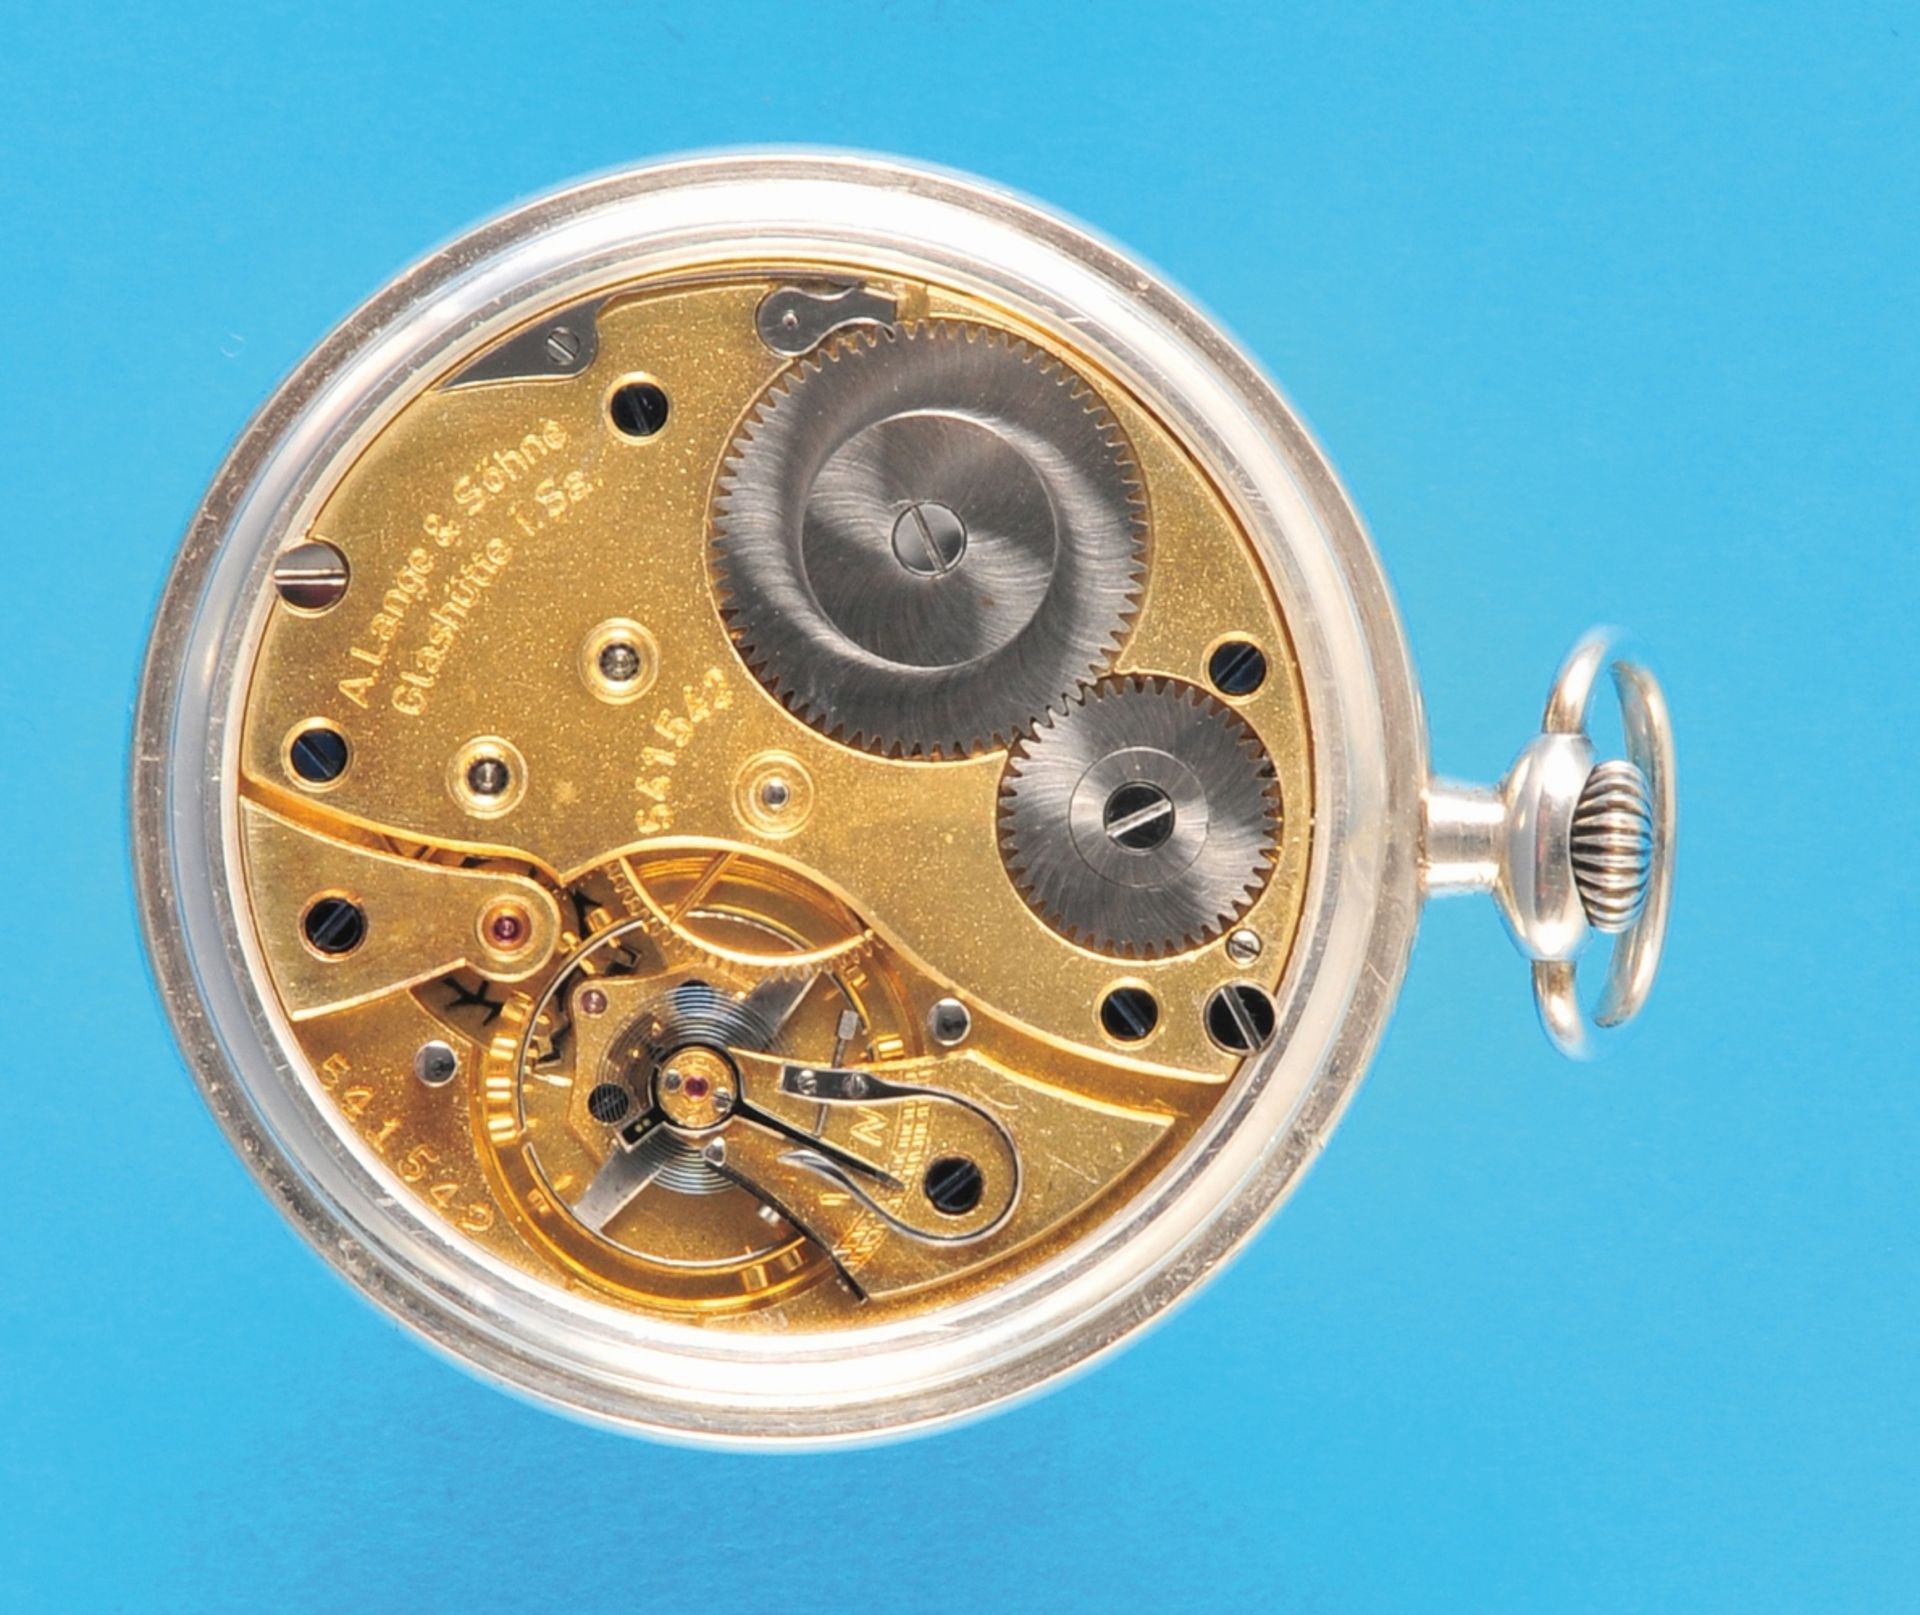 Silver tailcoat clock, A. Lange & Söhne